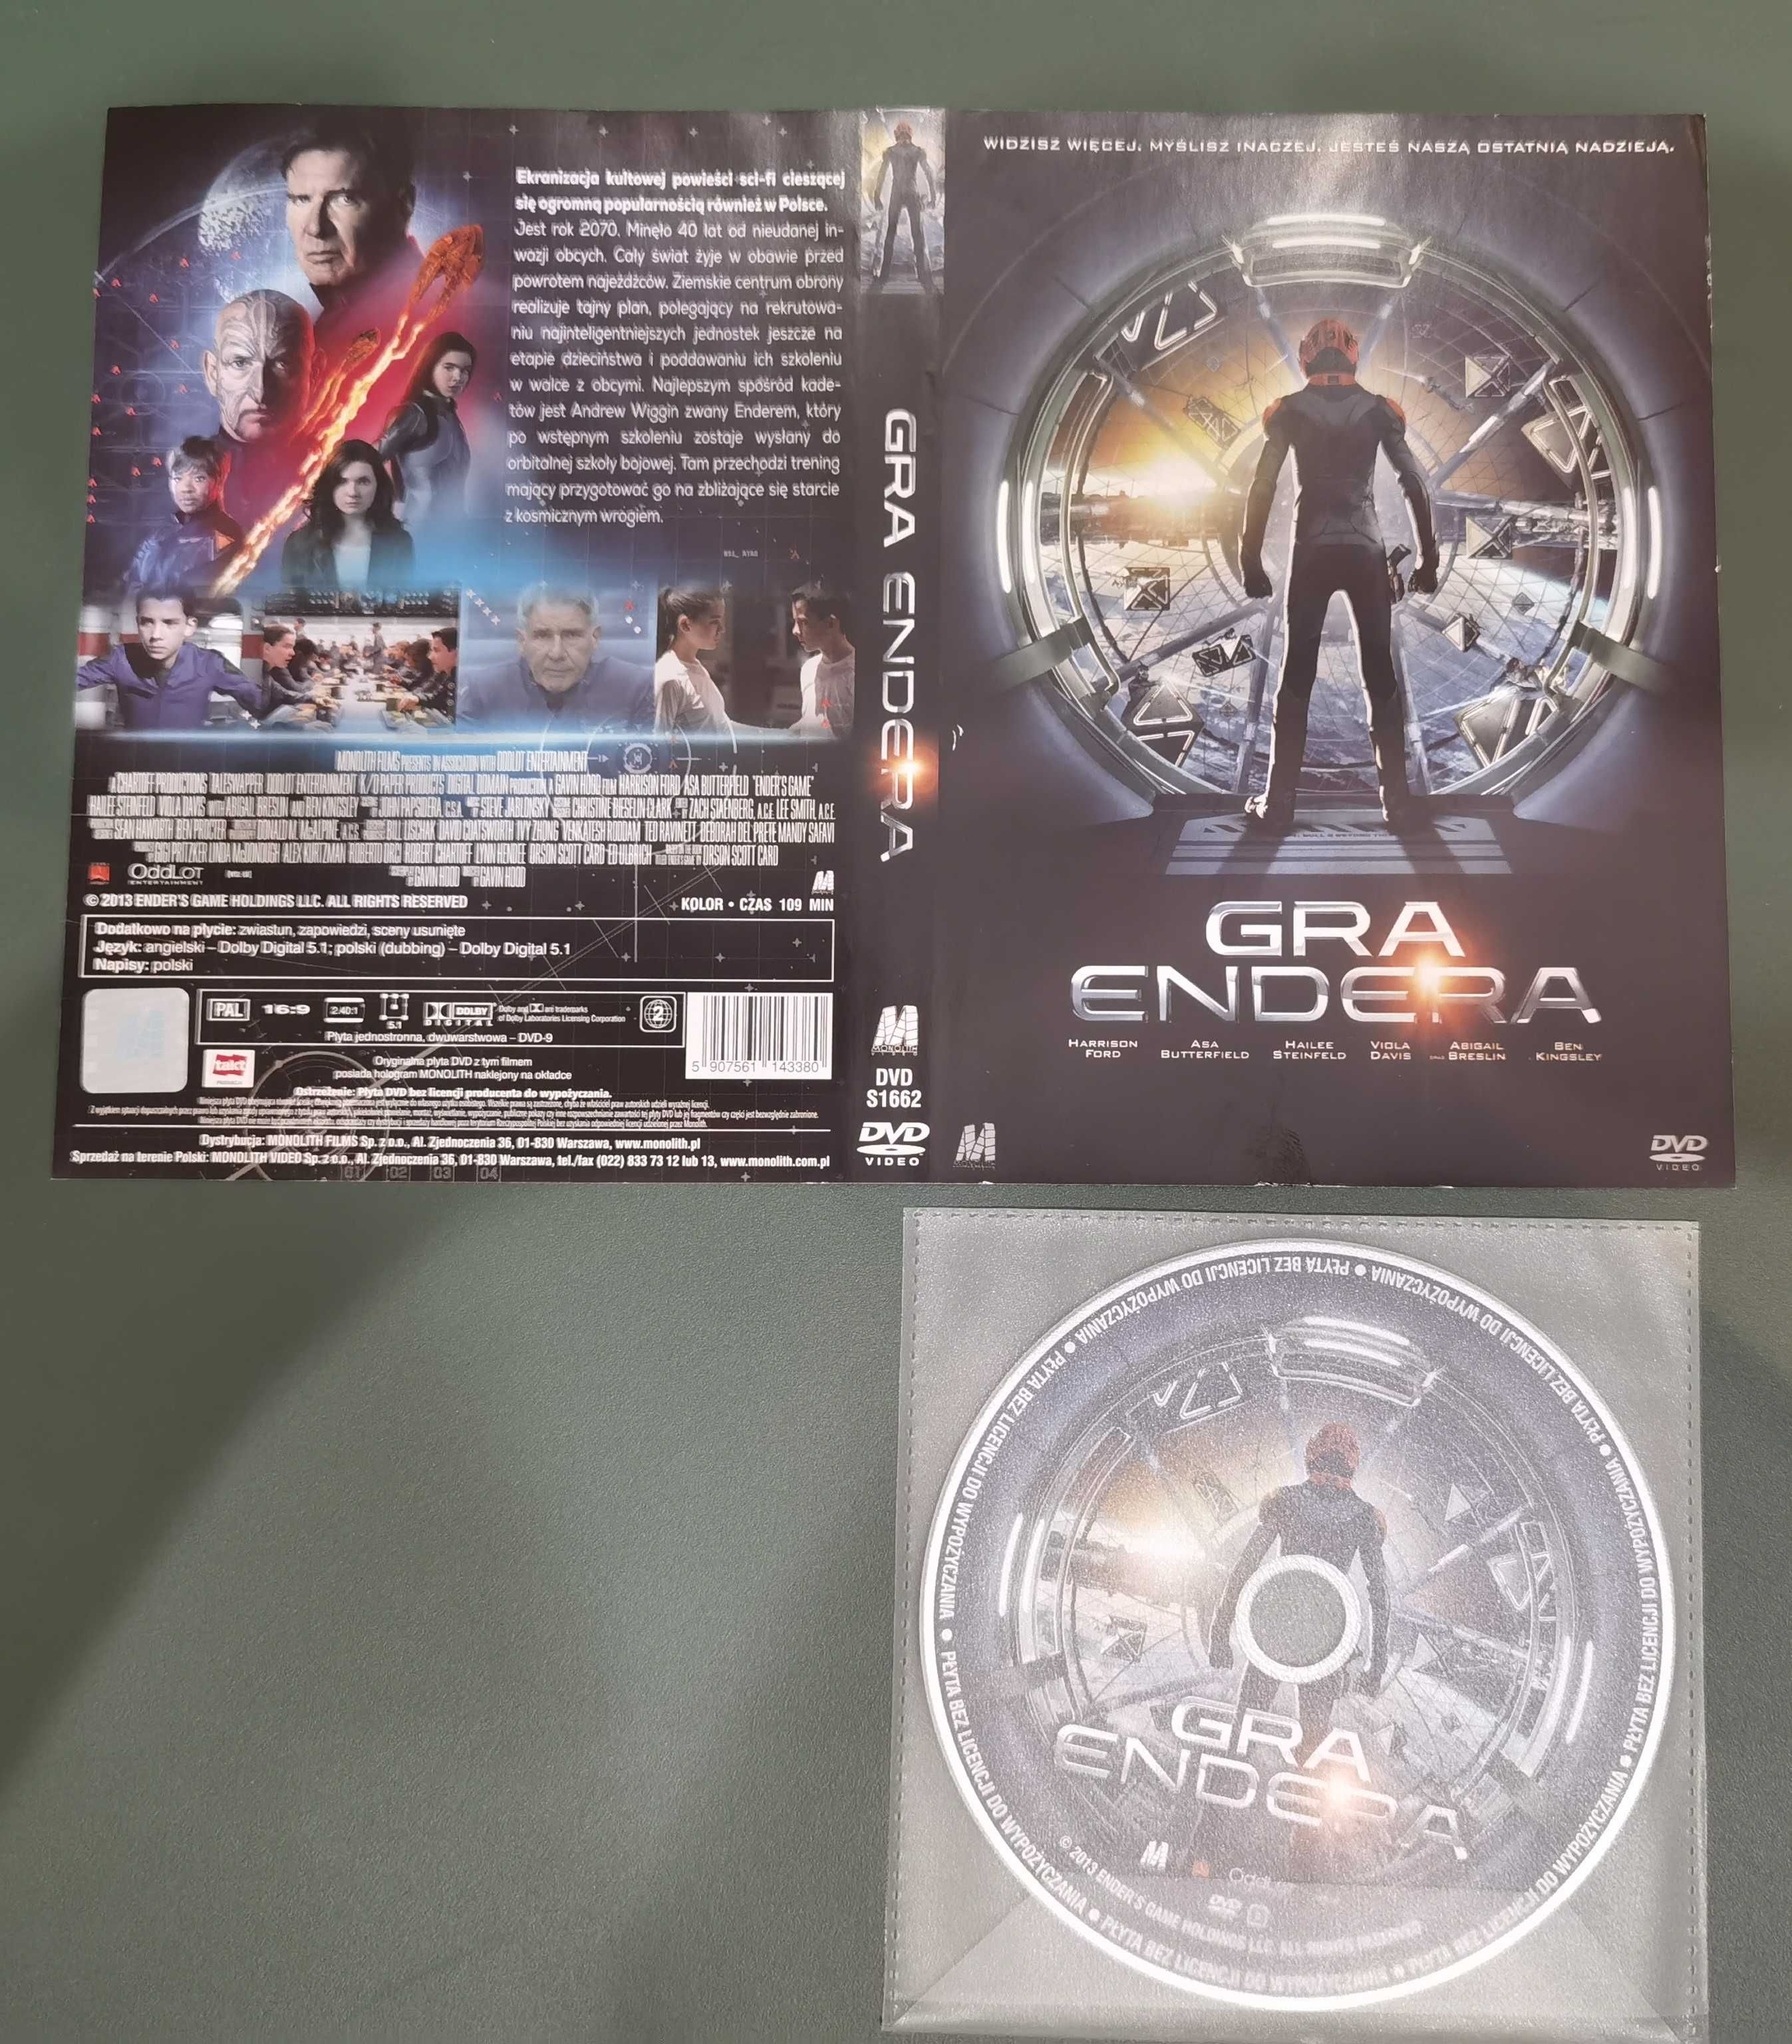 Gra Endera [DVD]